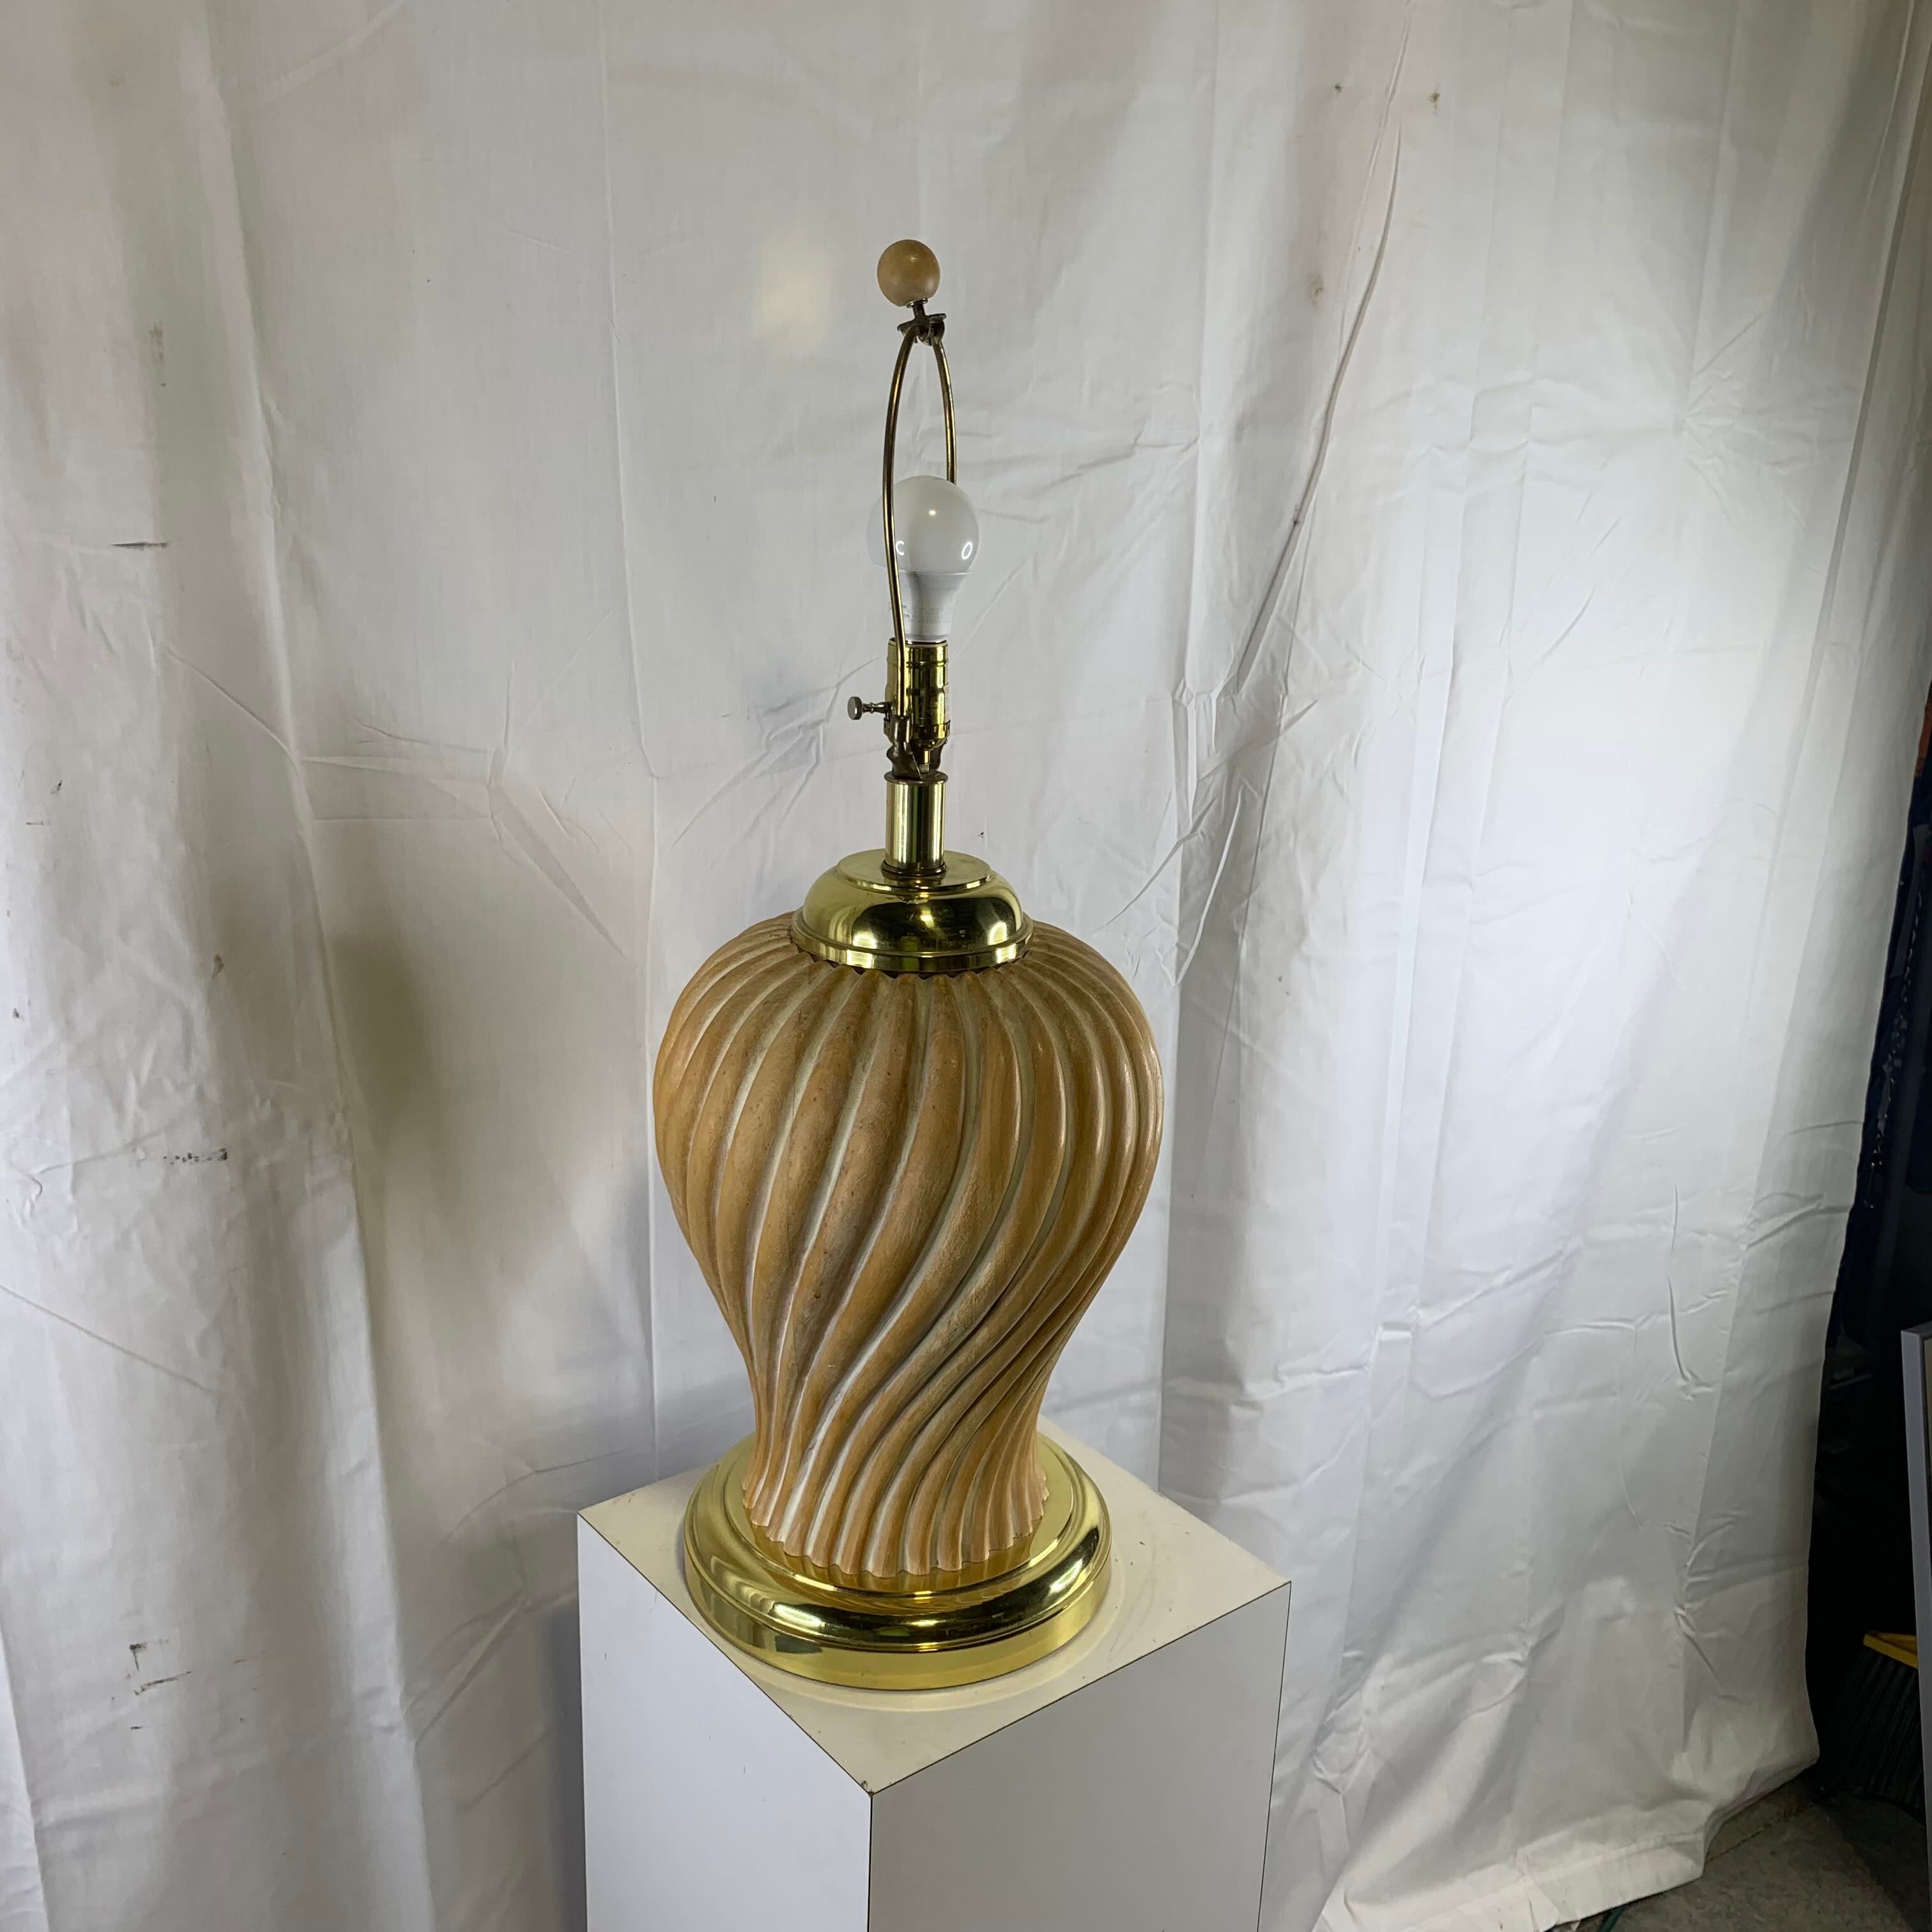 11" Diameter x 30" Mid Century French Ceramic Table Lamp